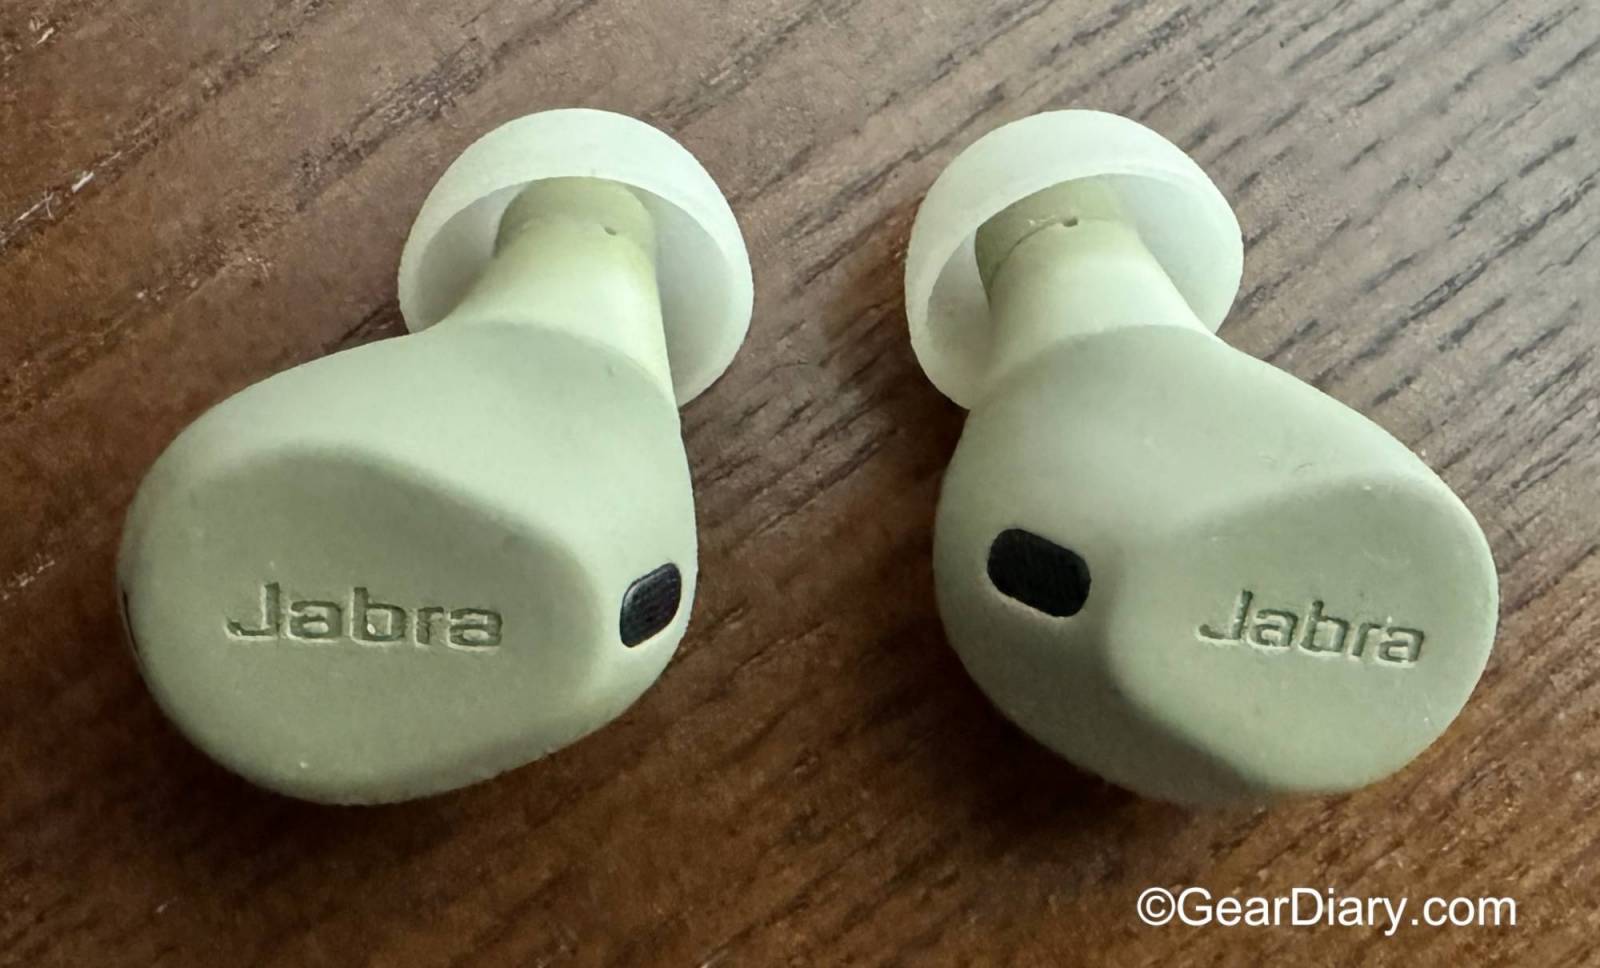 Jabra Elite 8 Active Gen 2 Review: The Next Gen of True Wireless Earbuds Contains Some Excellent Updates